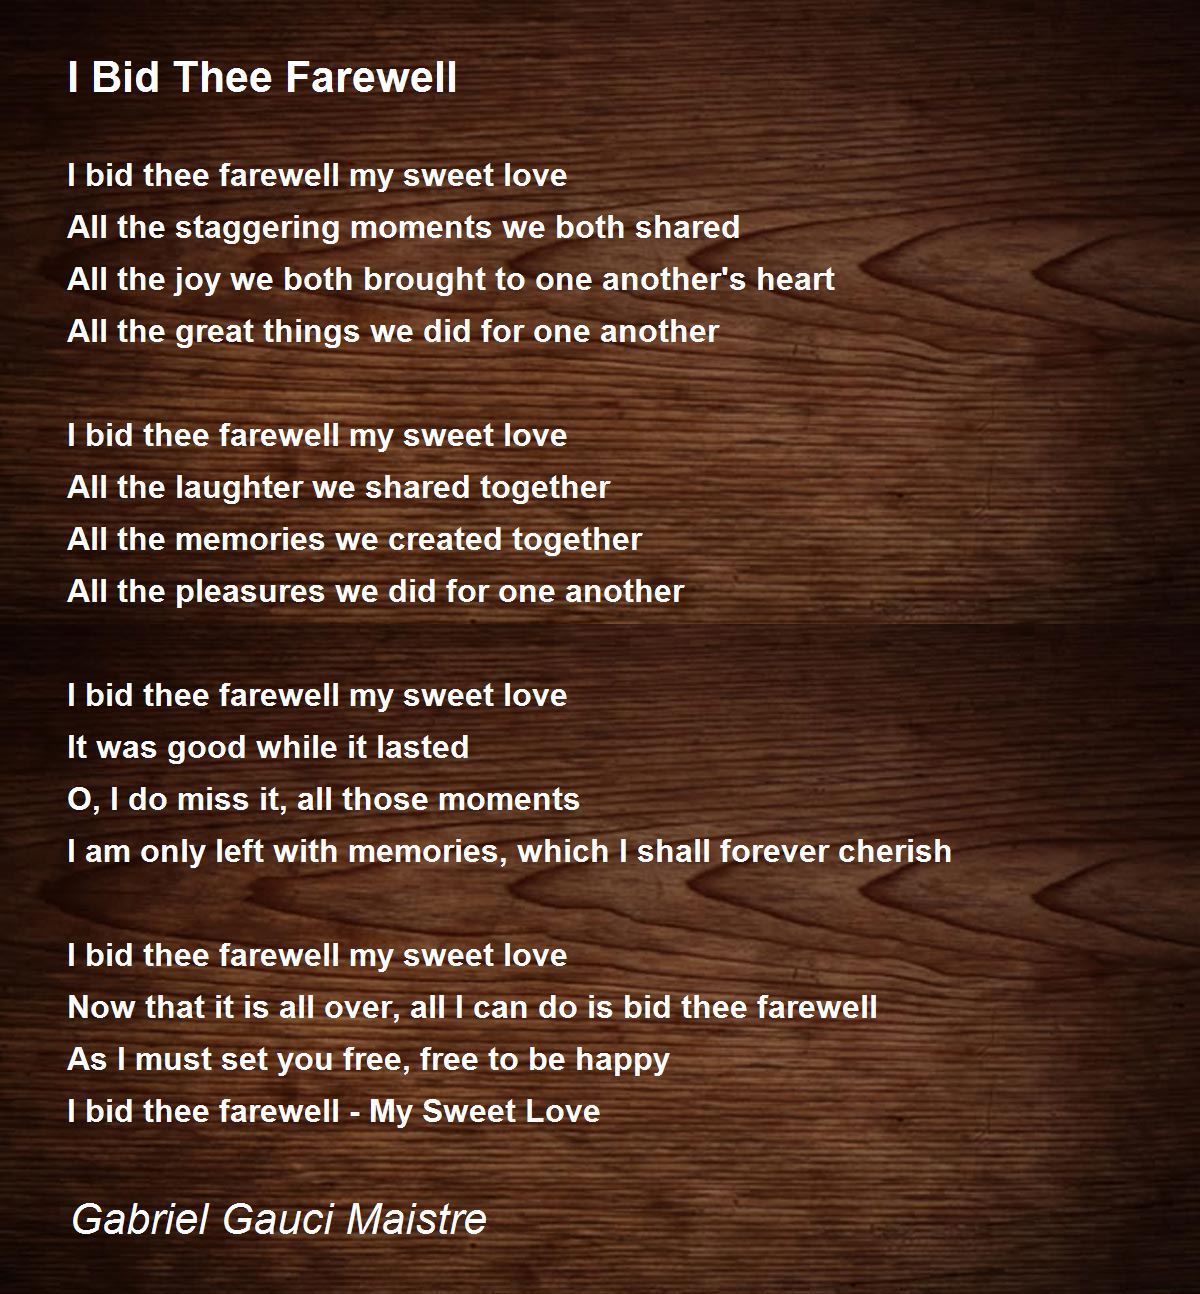 I Bid Thee Farewell - I Bid Thee Farewell by Patrick